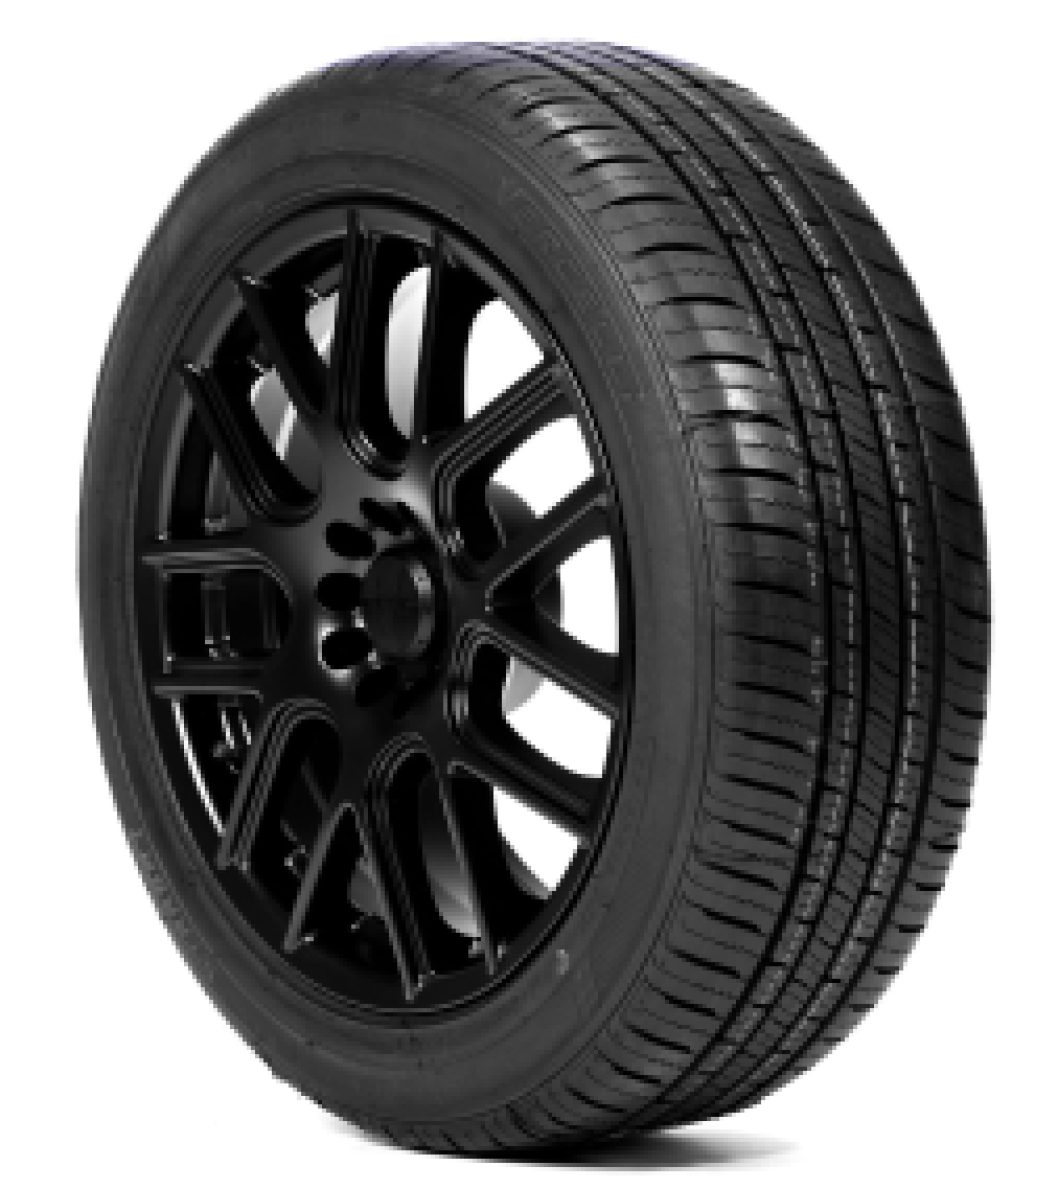 Meguiar's G18715 Hot Shine Reflect Tire Shine, 15 oz